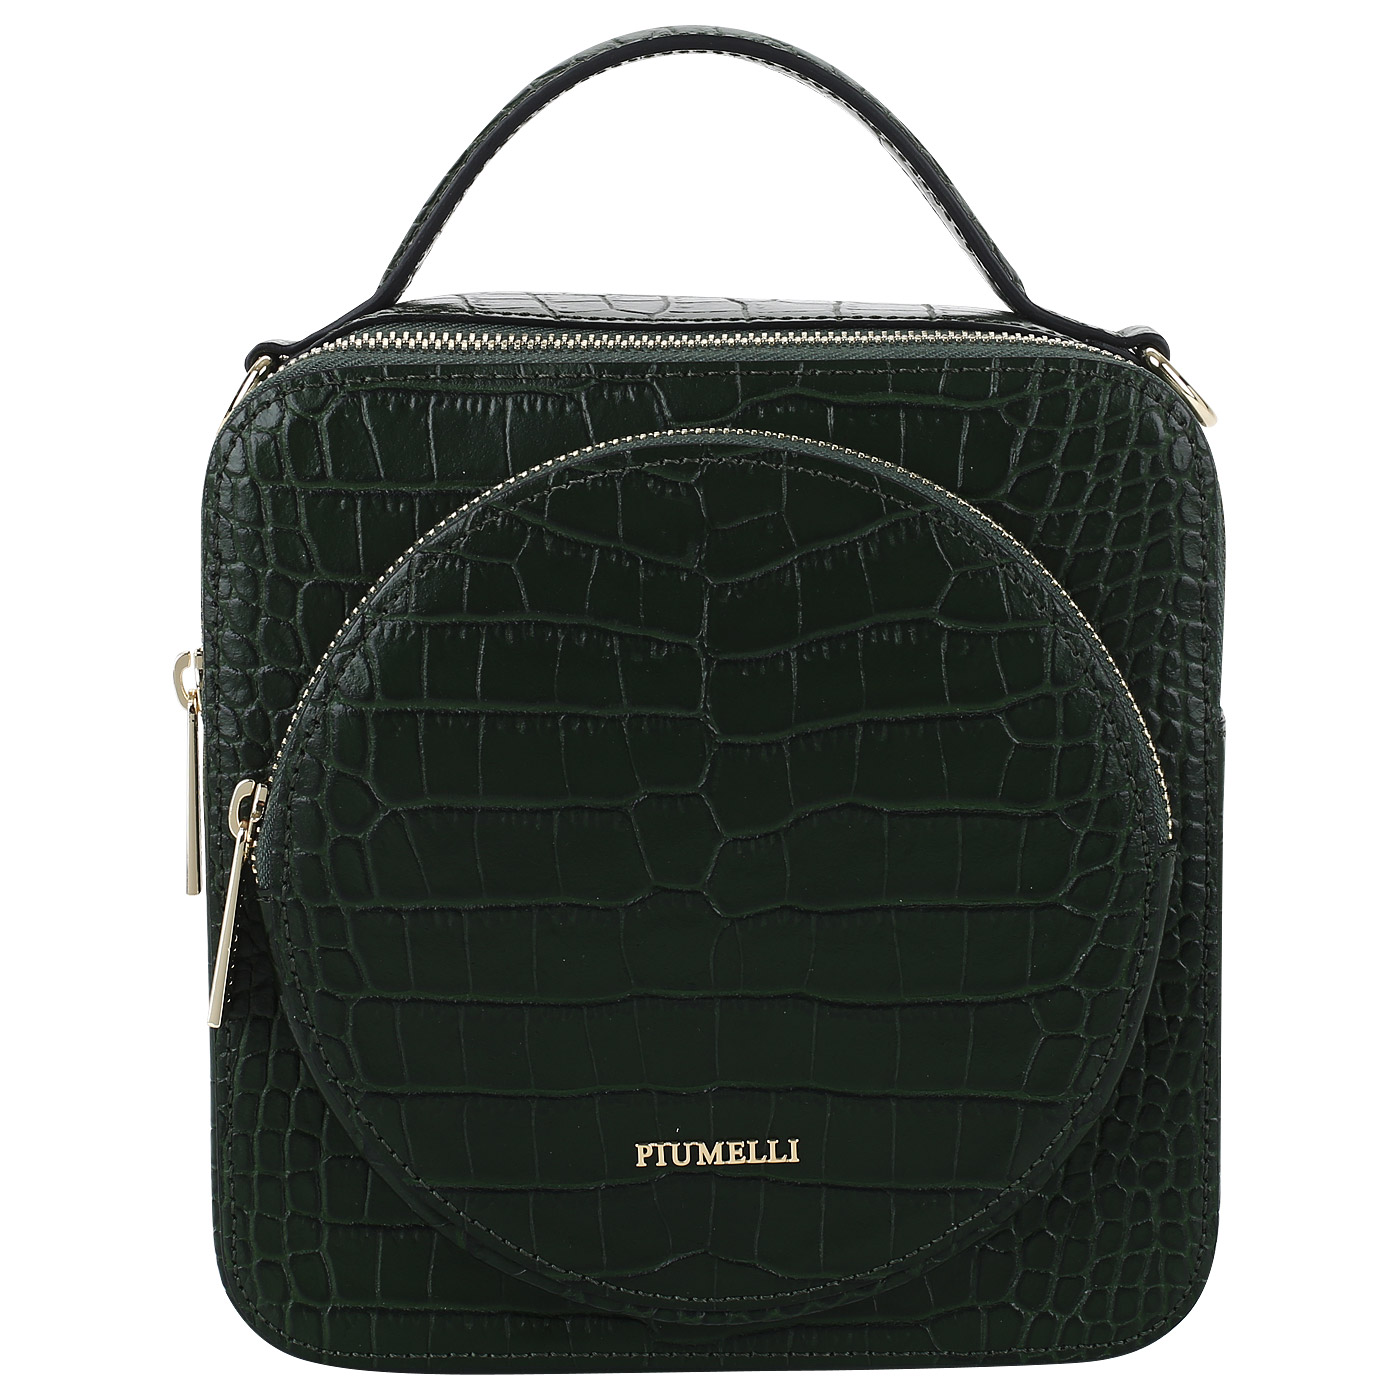 Piumelli Кожаная сумочка со съемным ремешком